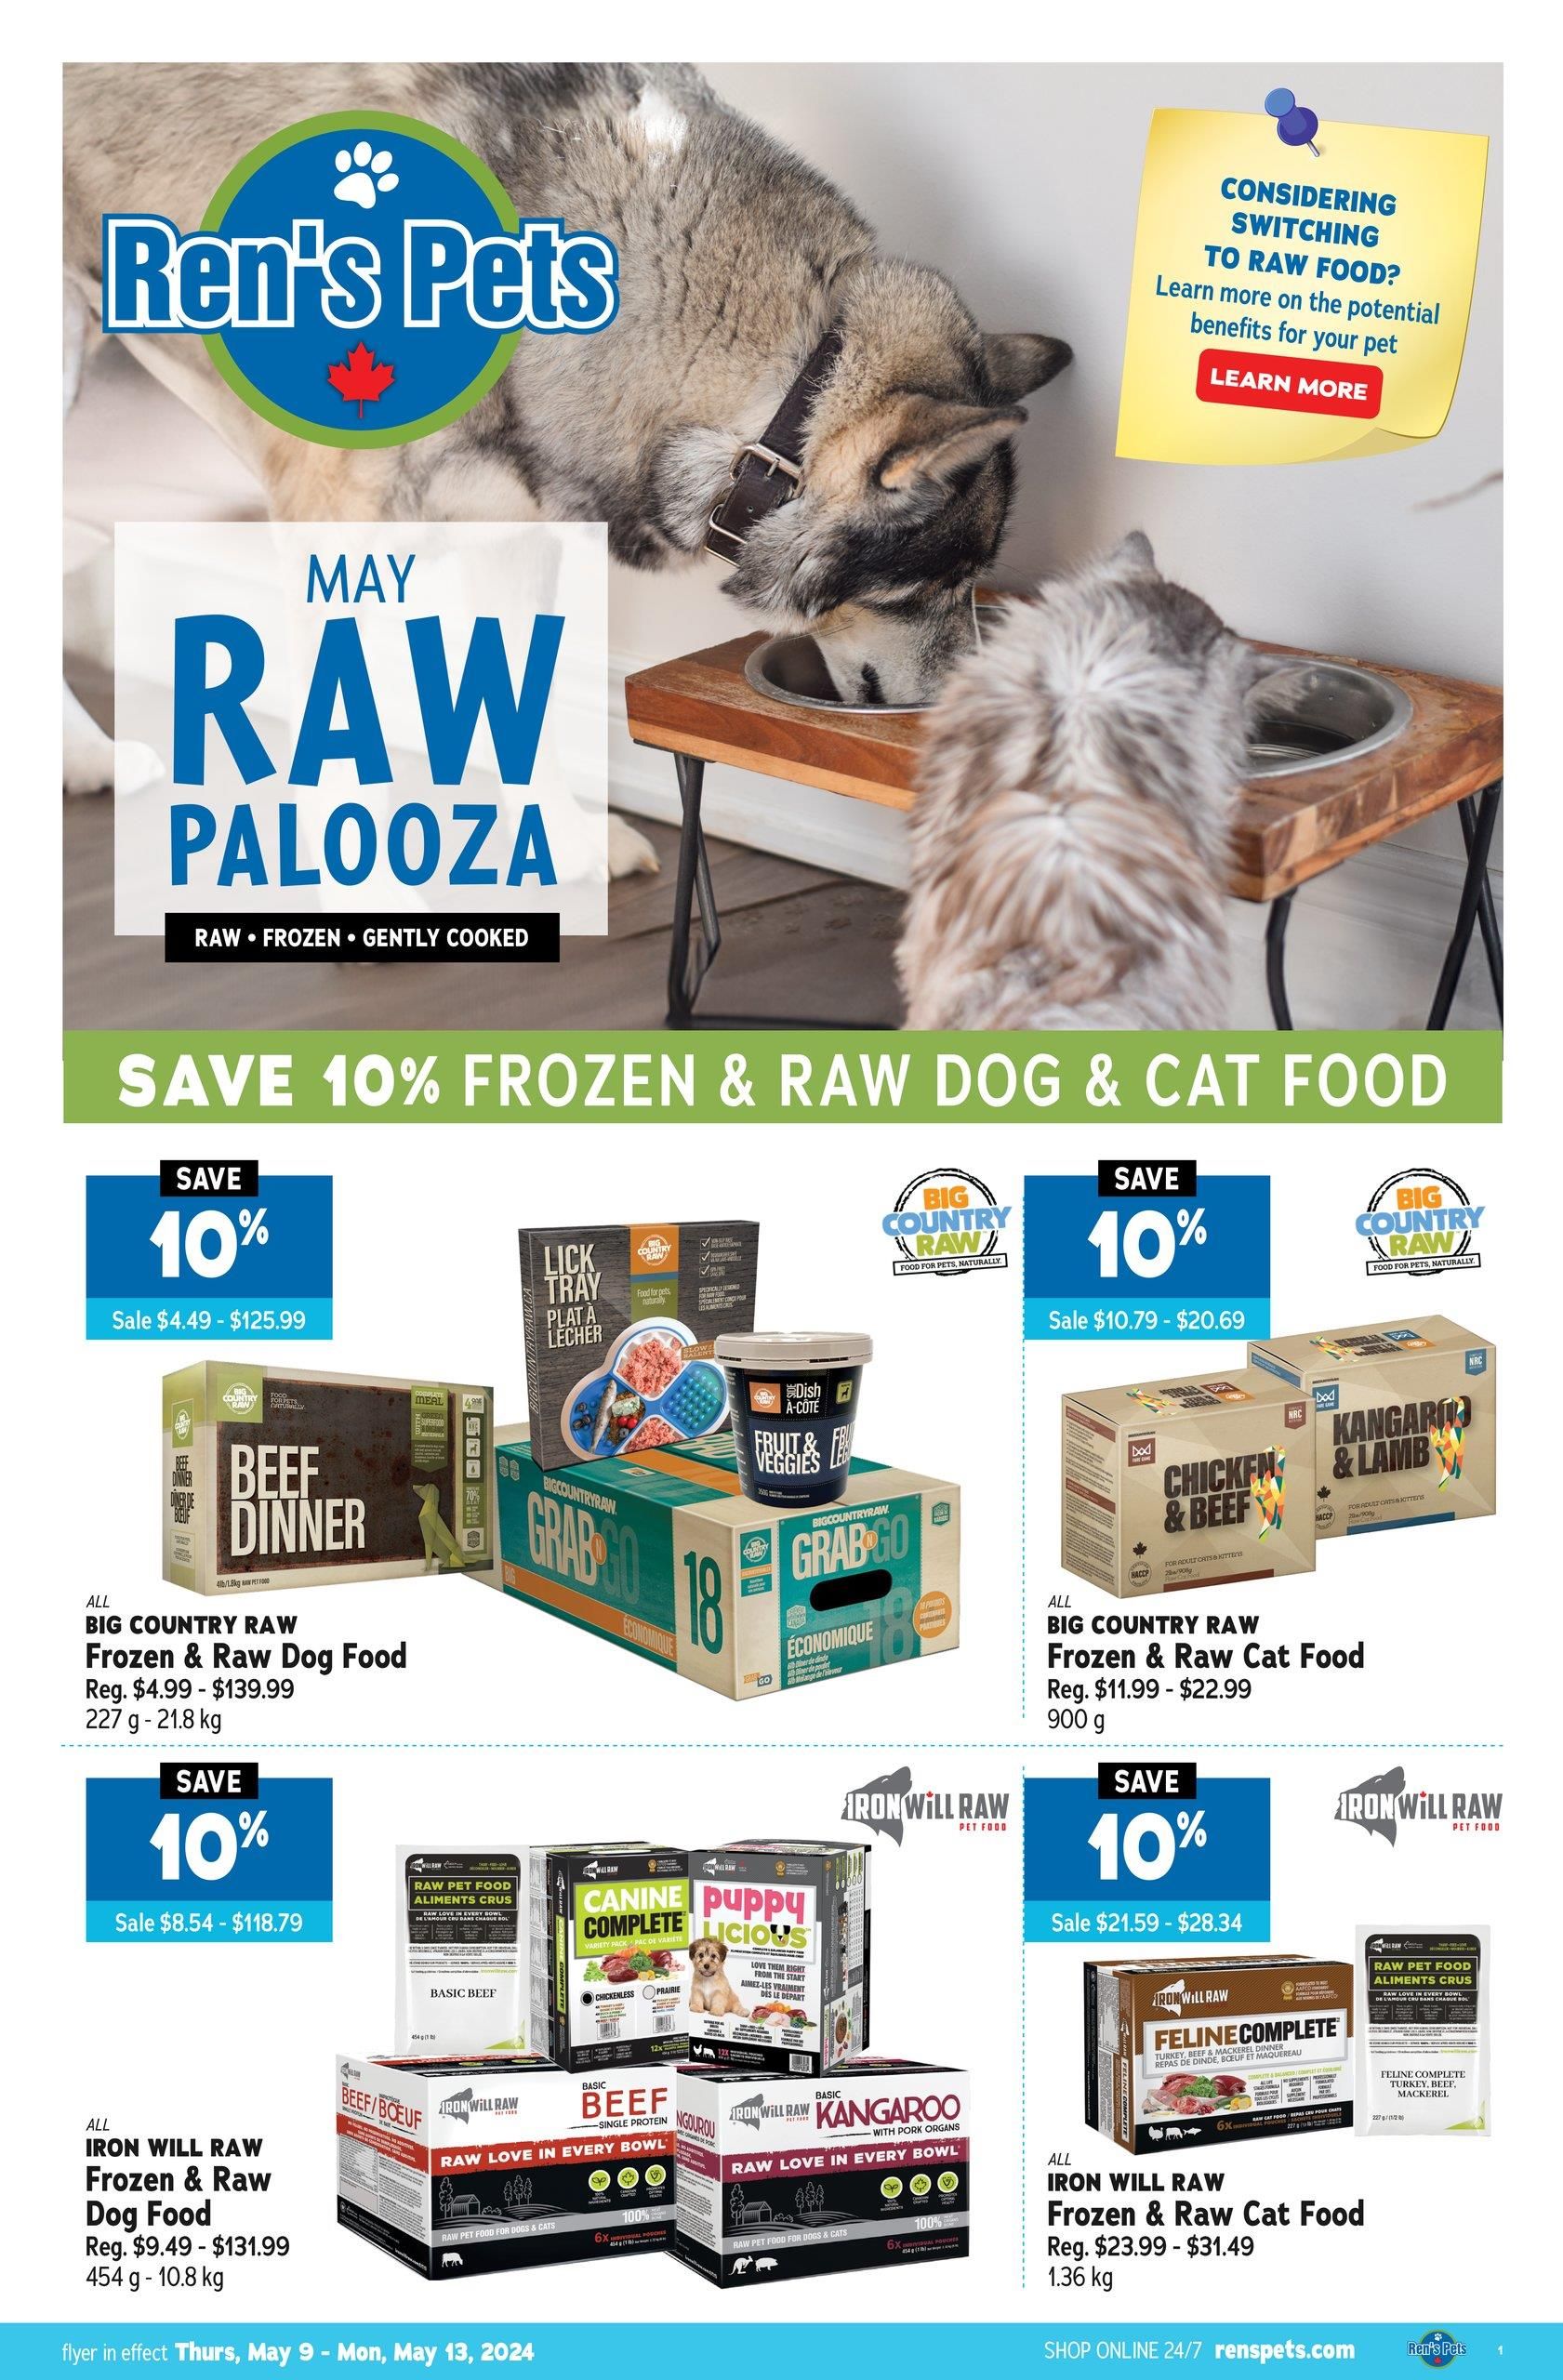 Ren's Pets - May Raw Palooza Flyer Specials